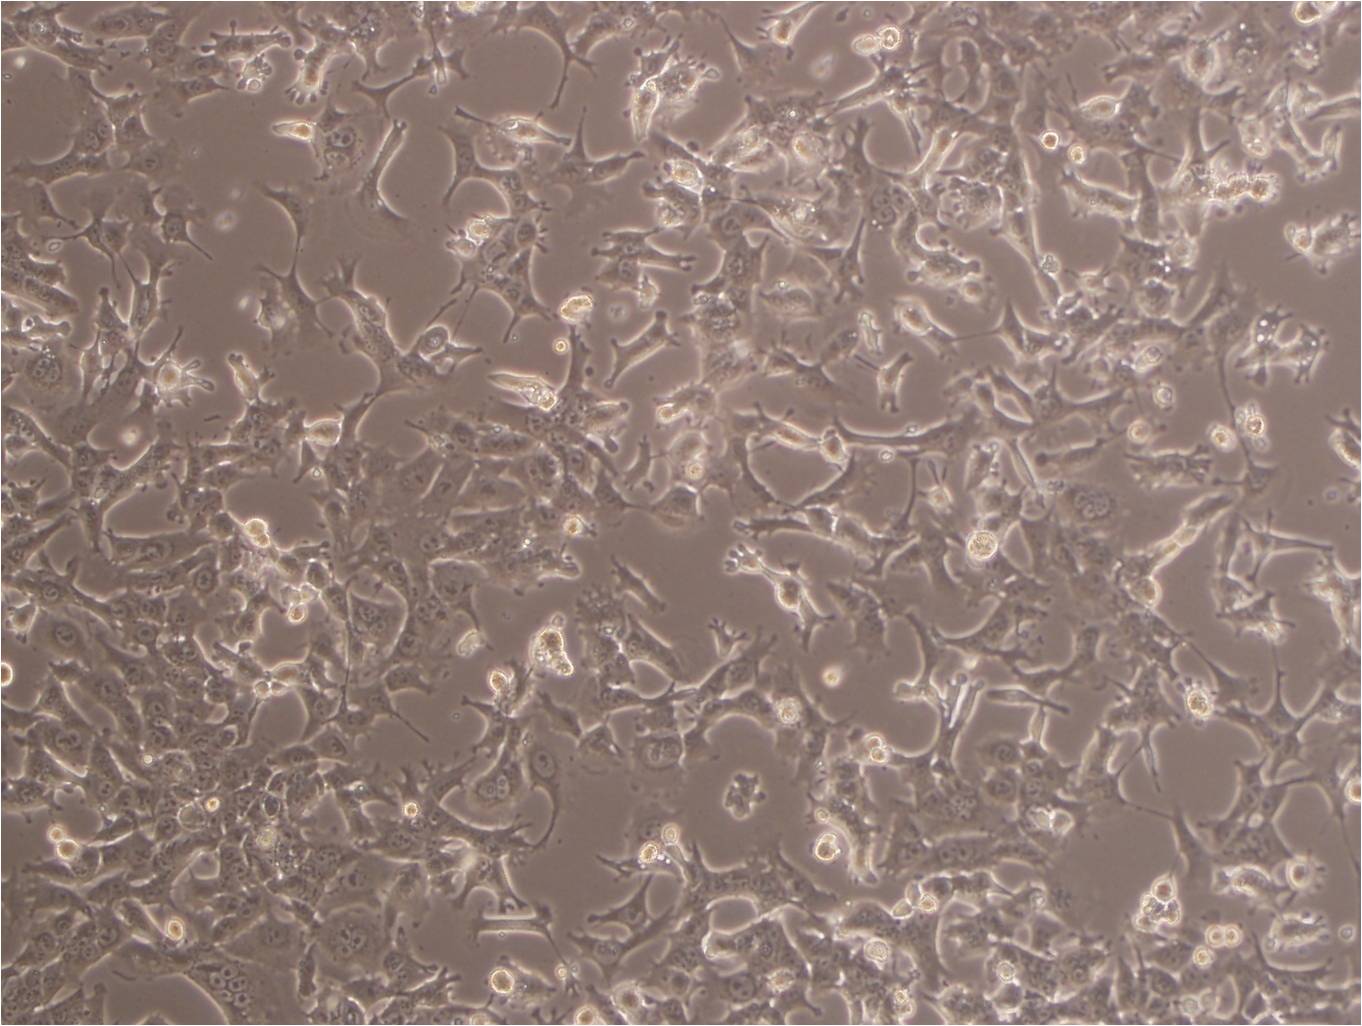 MDA-MB-231-luc:人乳腺癌复苏细胞(提供STR鉴定图谱),MDA-MB-231-luc